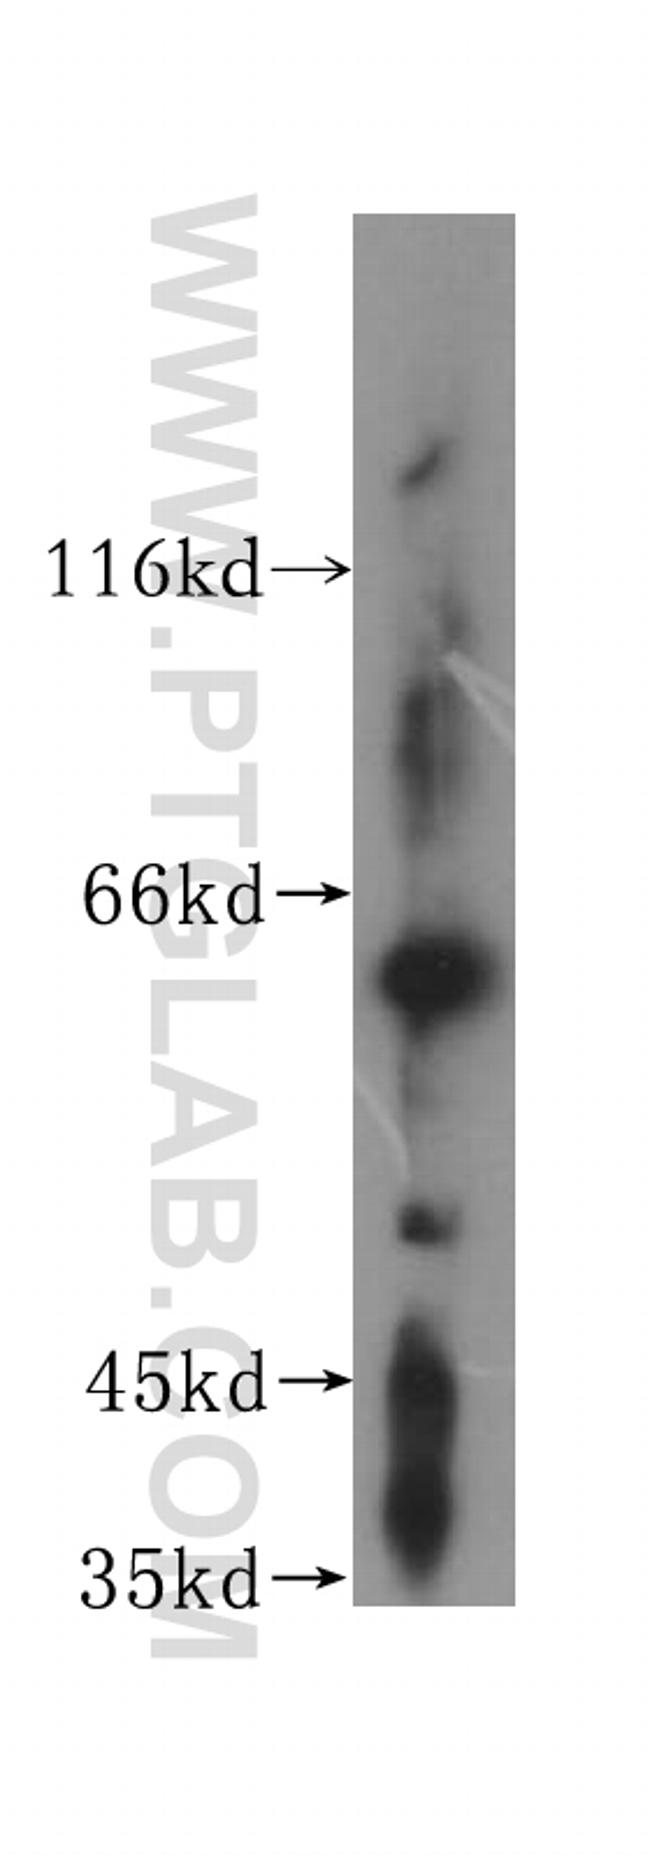 DCTN4 Antibody in Western Blot (WB)